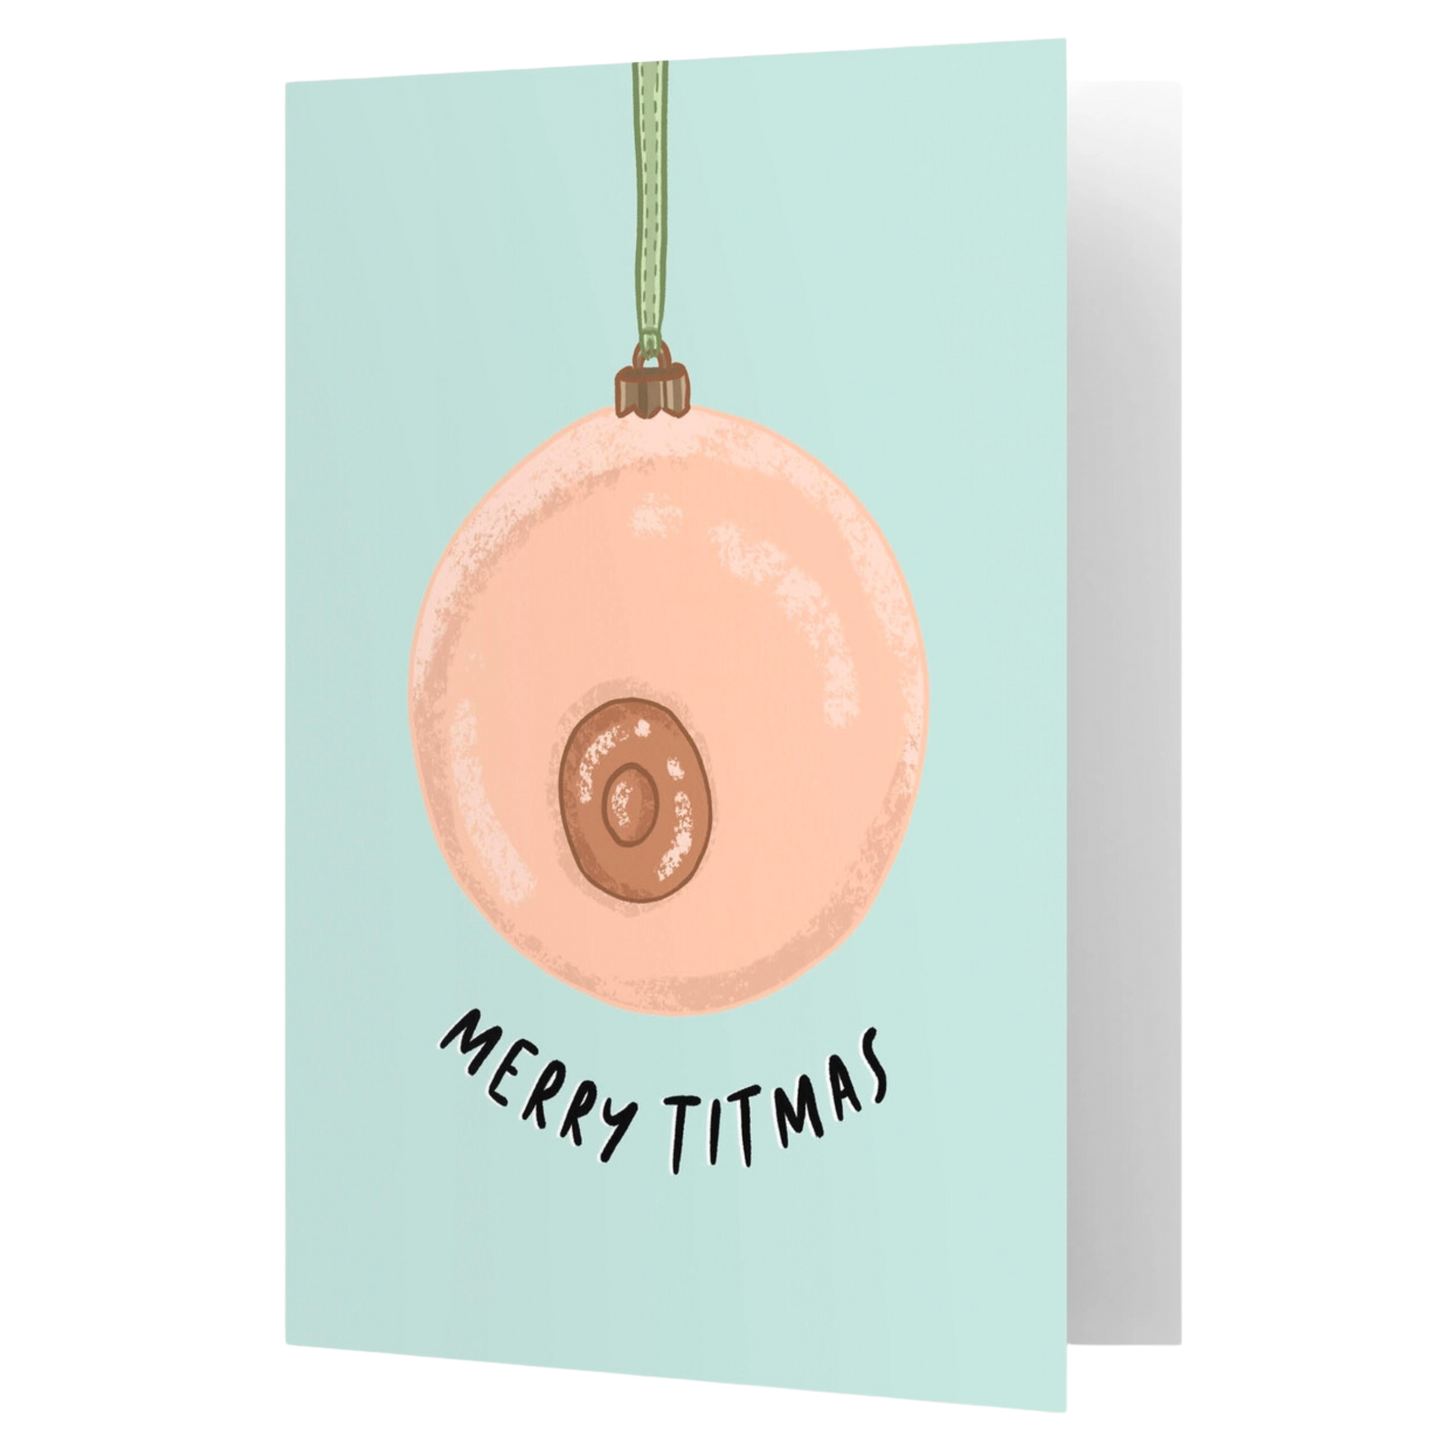 Merry Titmas Christmas Card